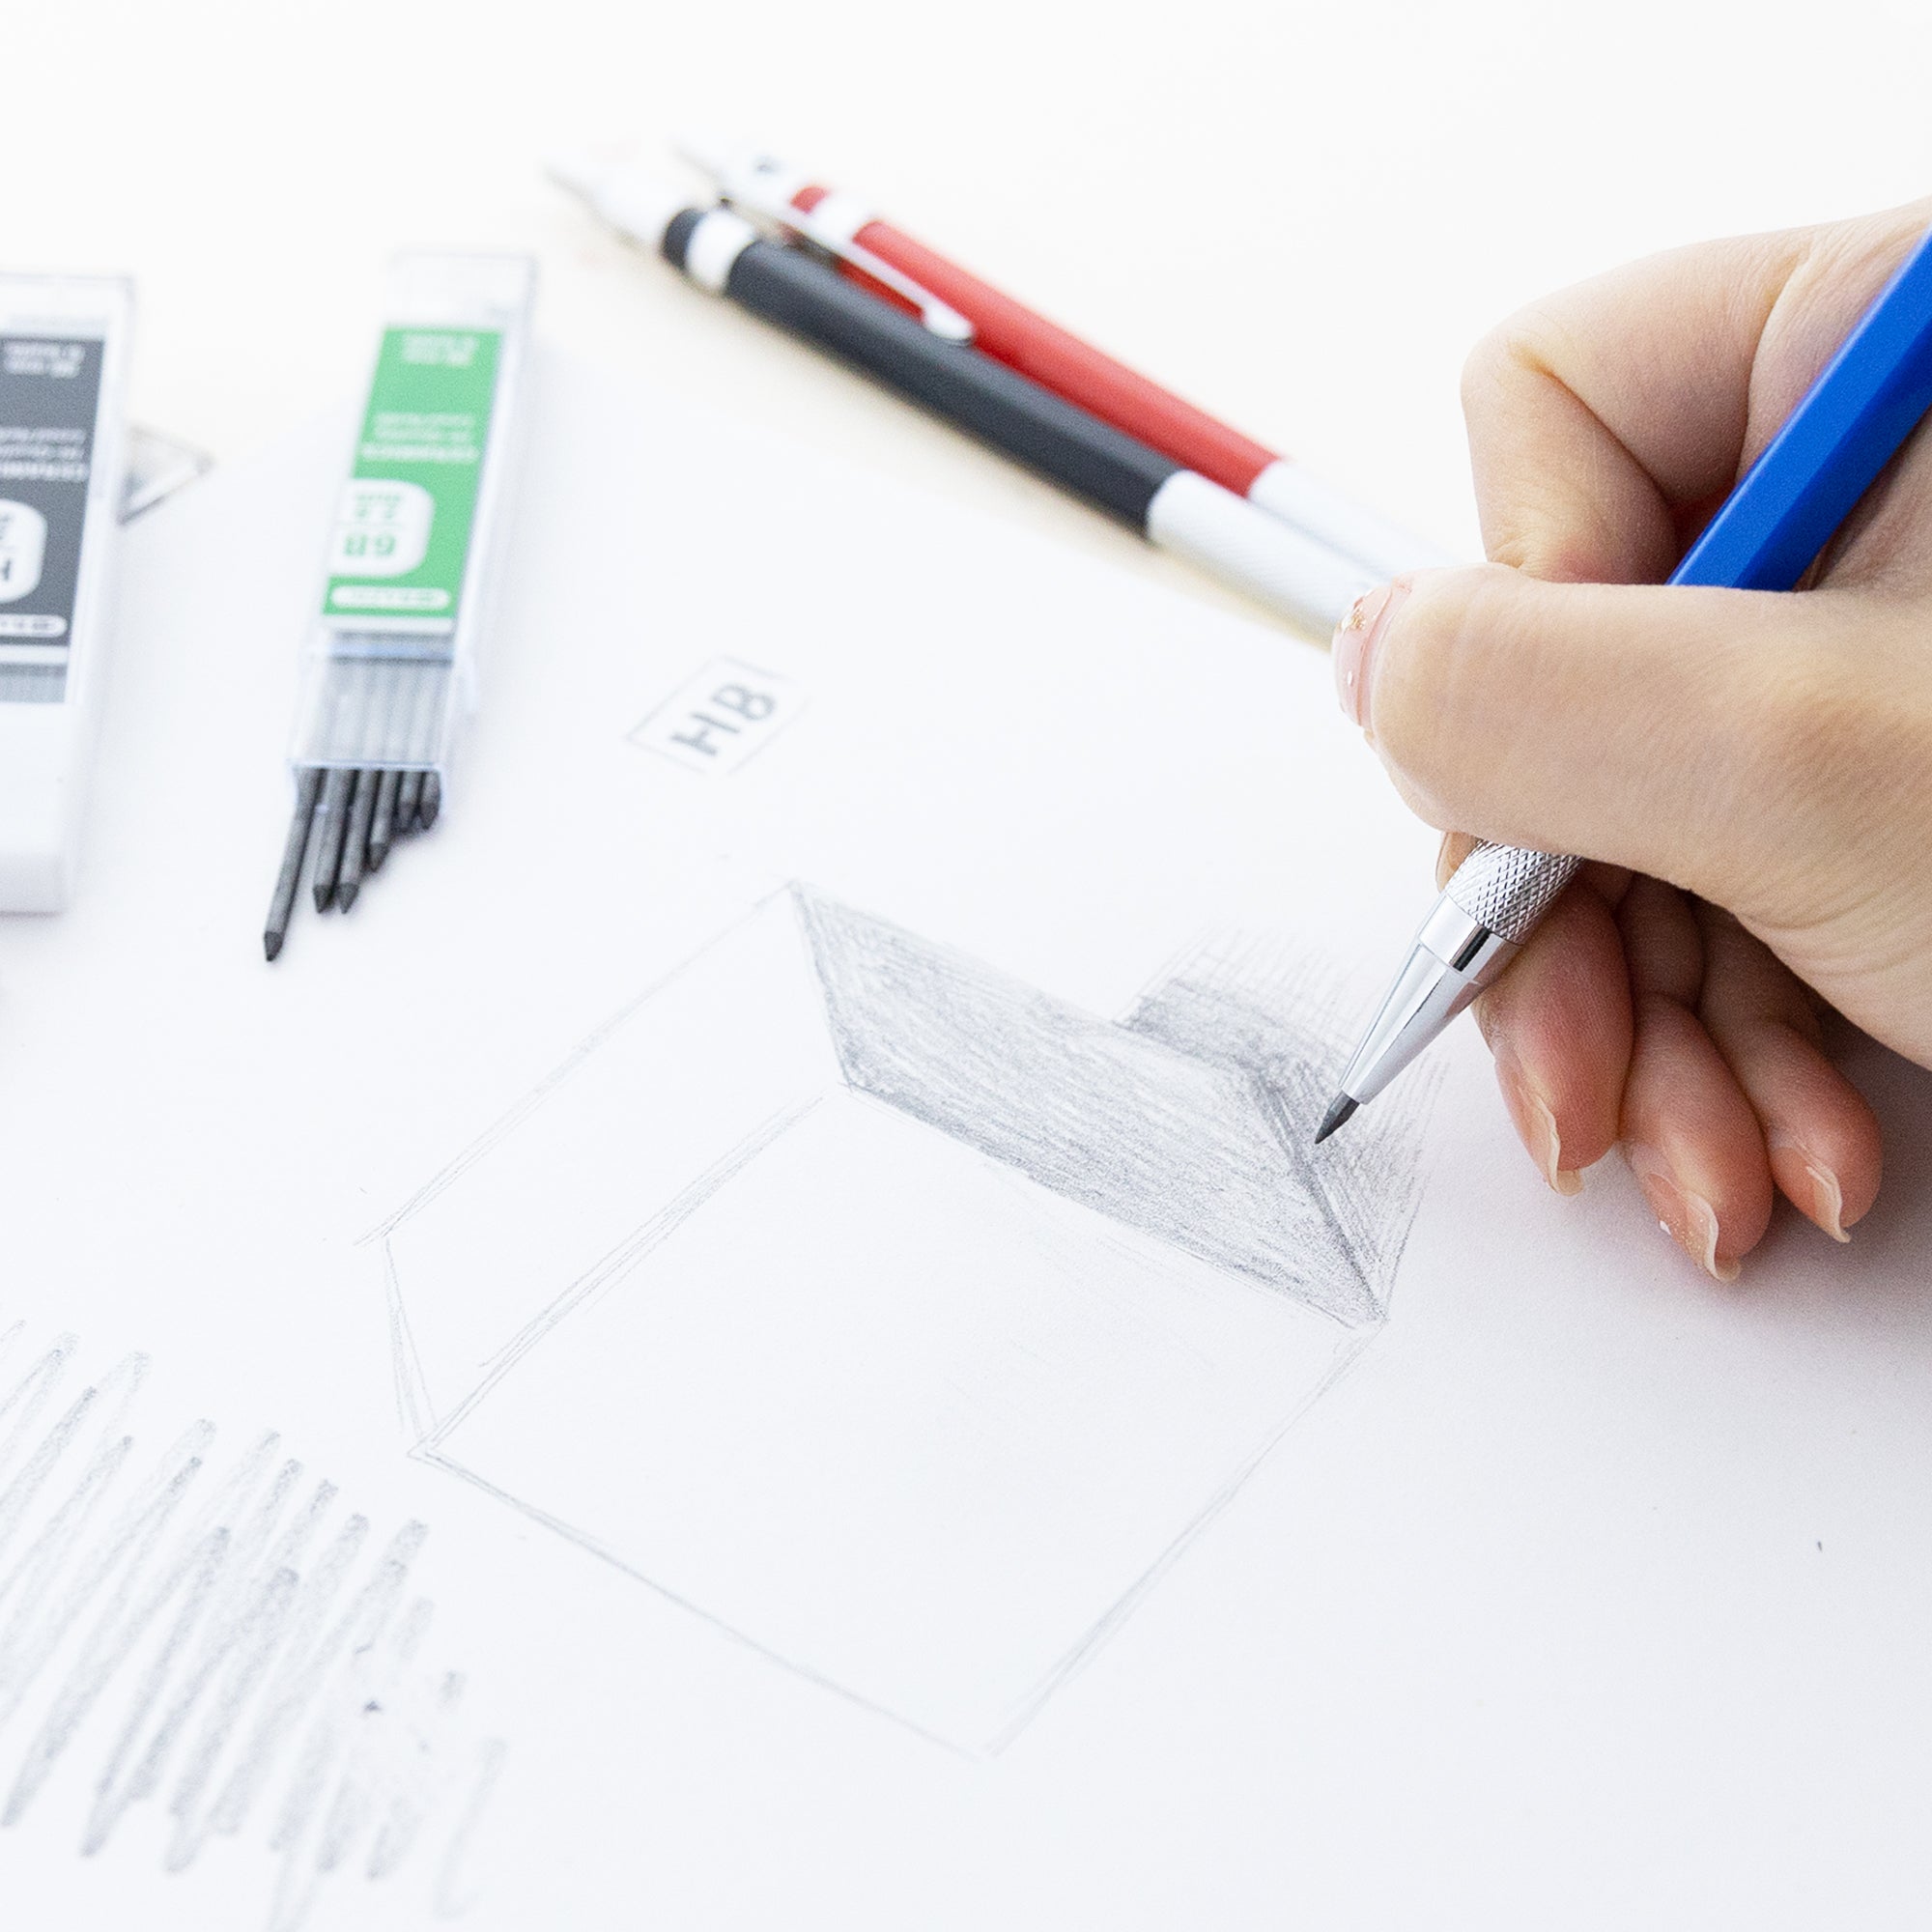 Professional 37/50/70 Pcs Drawing Sketching Pencil Set Beginner